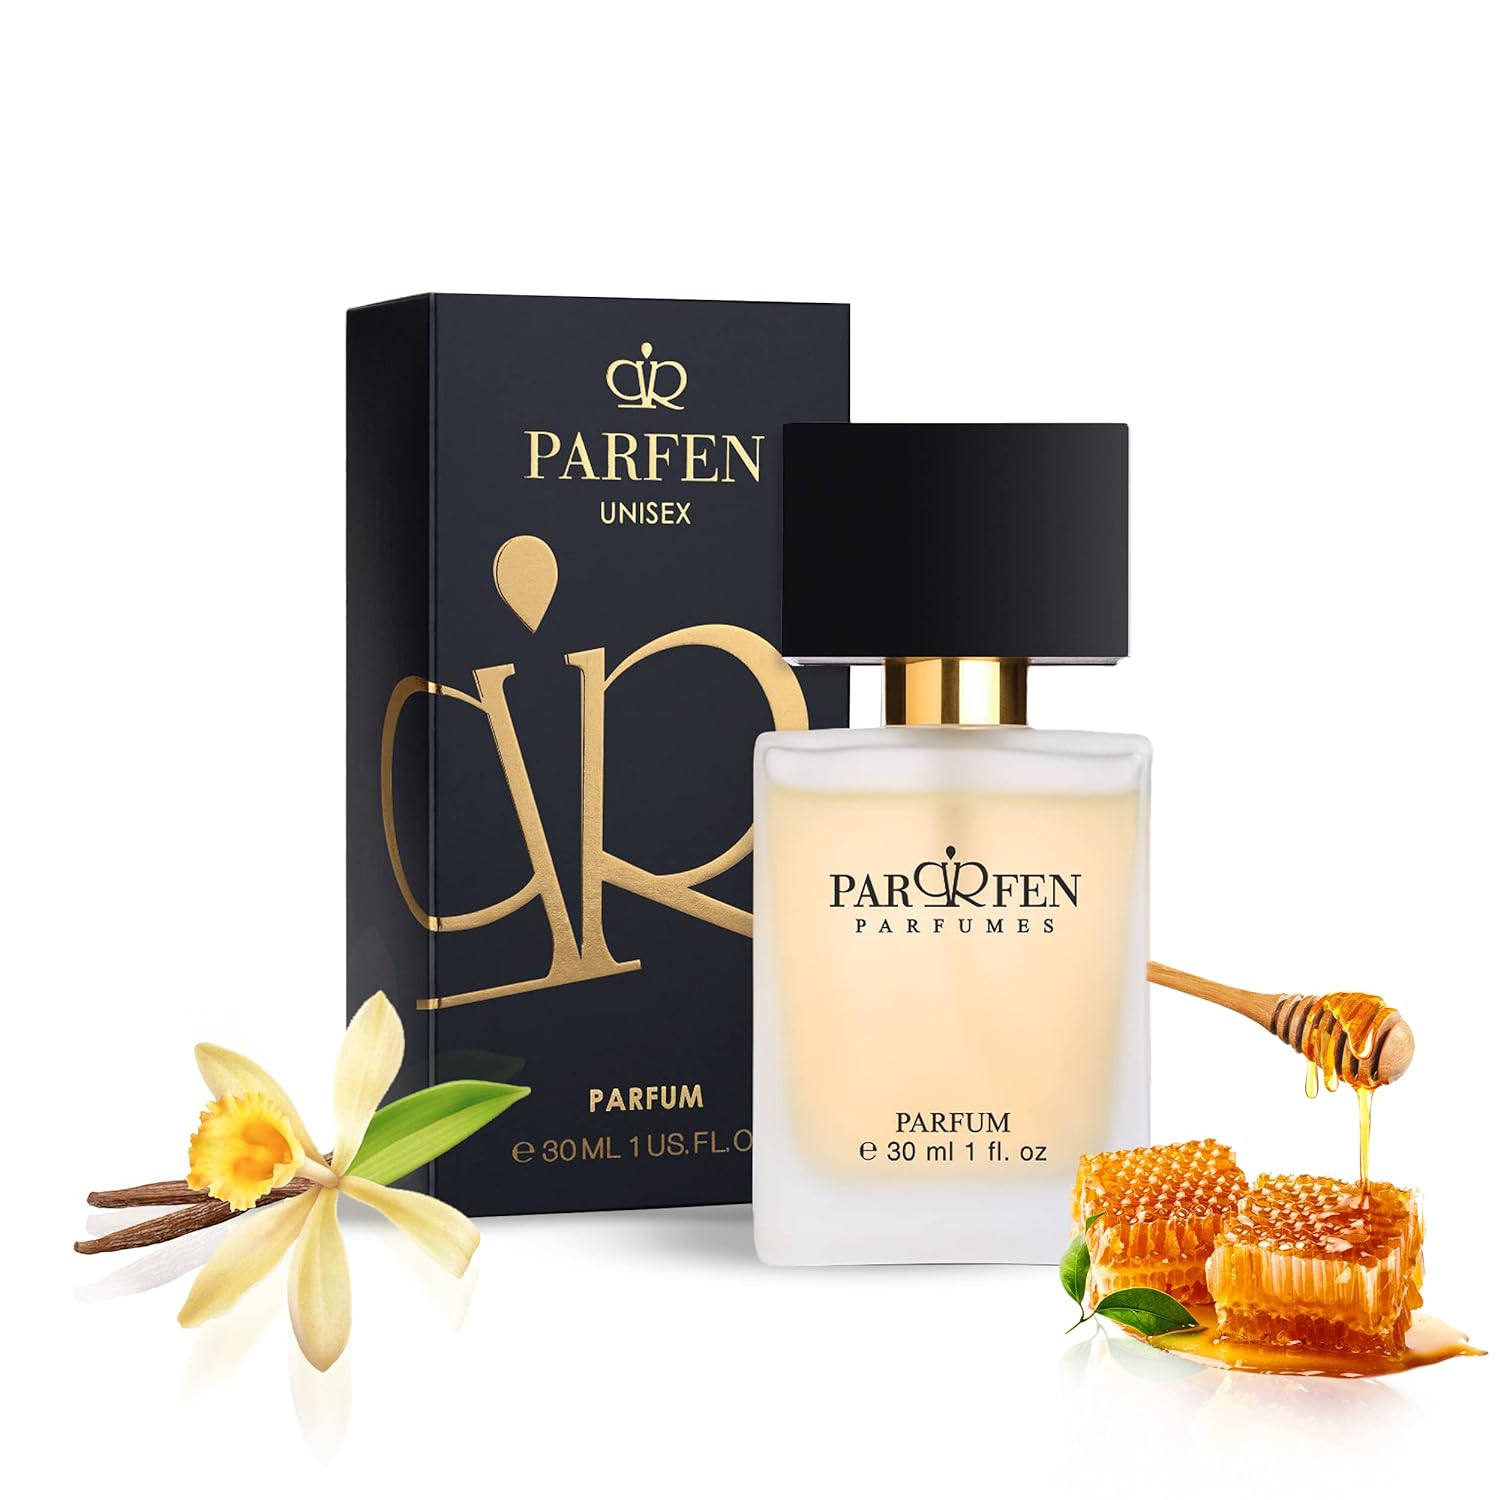 Parfen № 753 - Cherry Liqueur - Unisex Eau de Parfum 30 ml - Highly concentrated fragrance with perfume from France, analogue perfume men/women